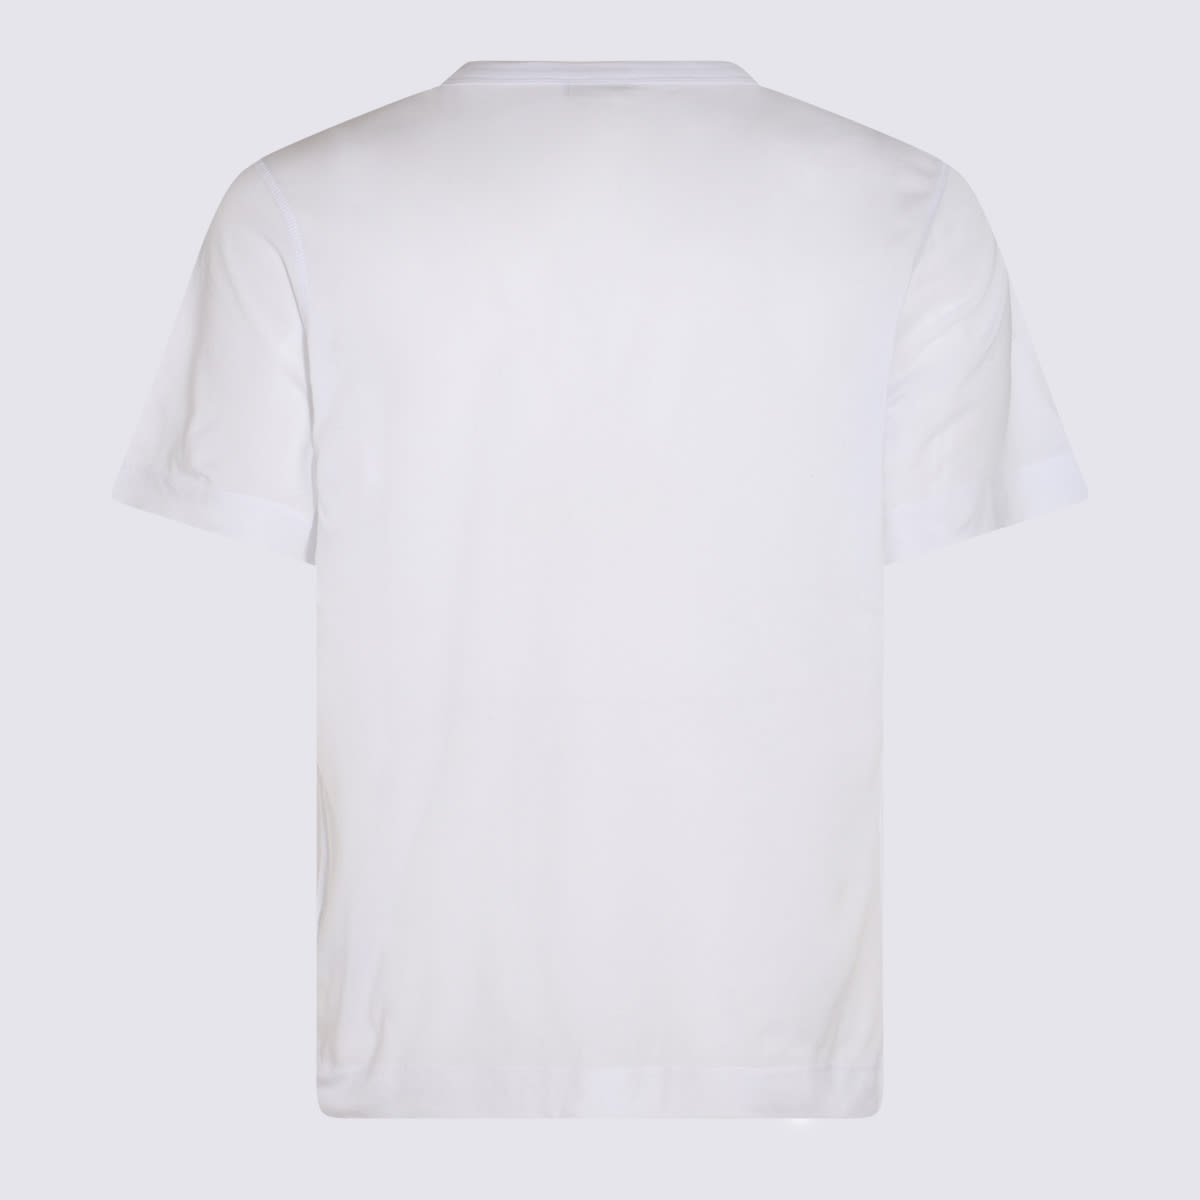 Dries Van Noten White Cotton T-shirt